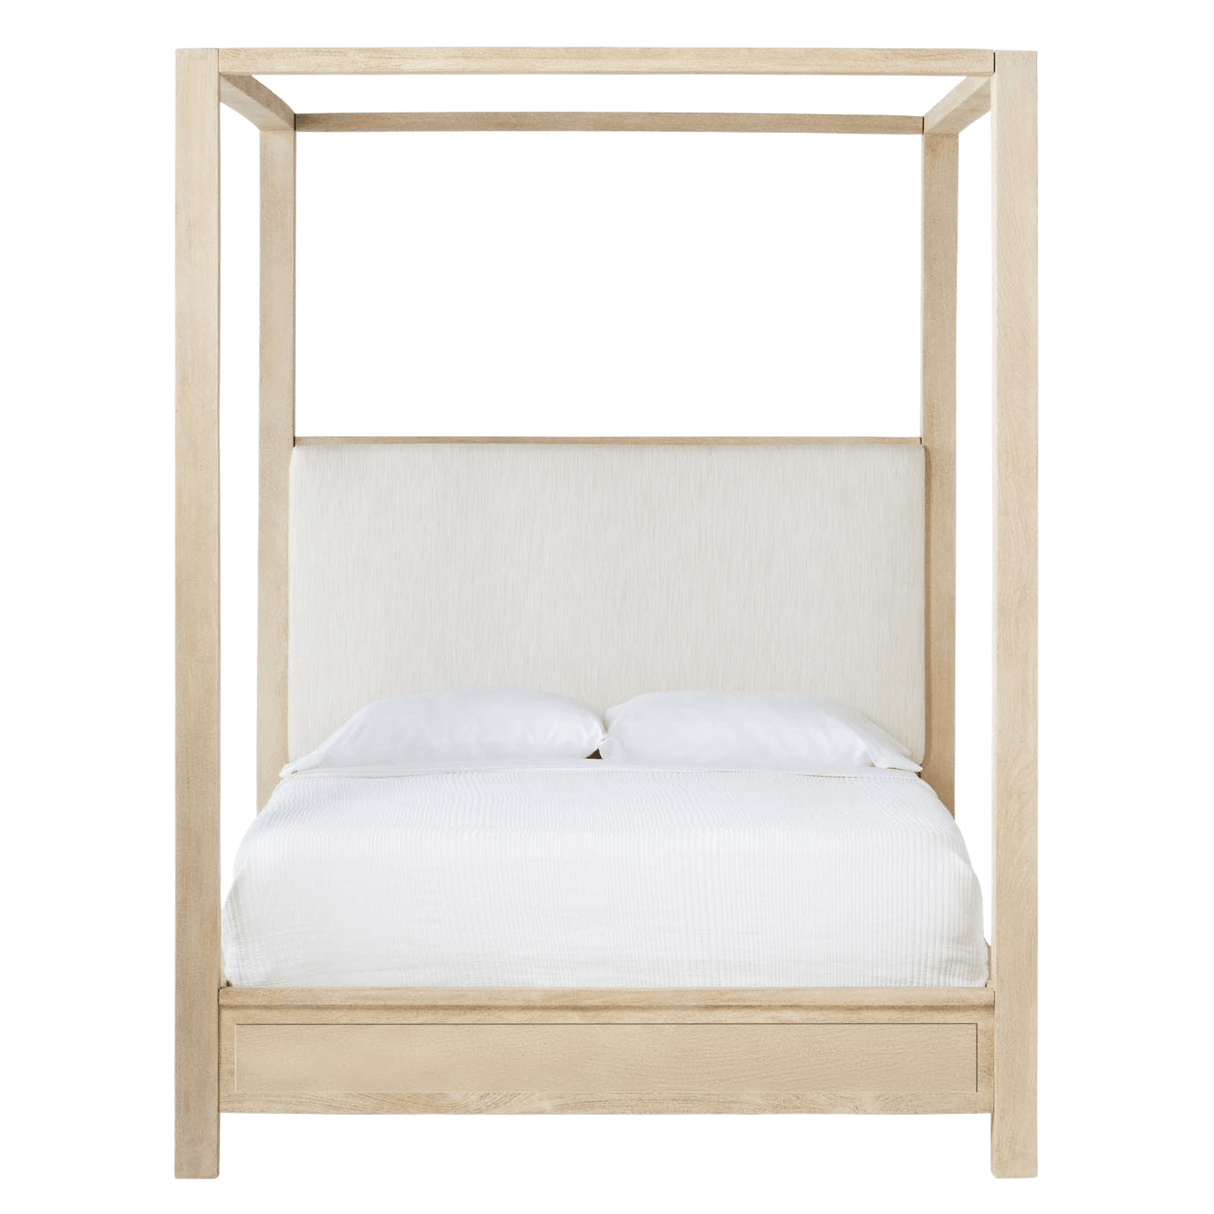 Made Goods Allesandro Canopy Bed Furniture made-goods-FURALLESBDQNBWDN-BG